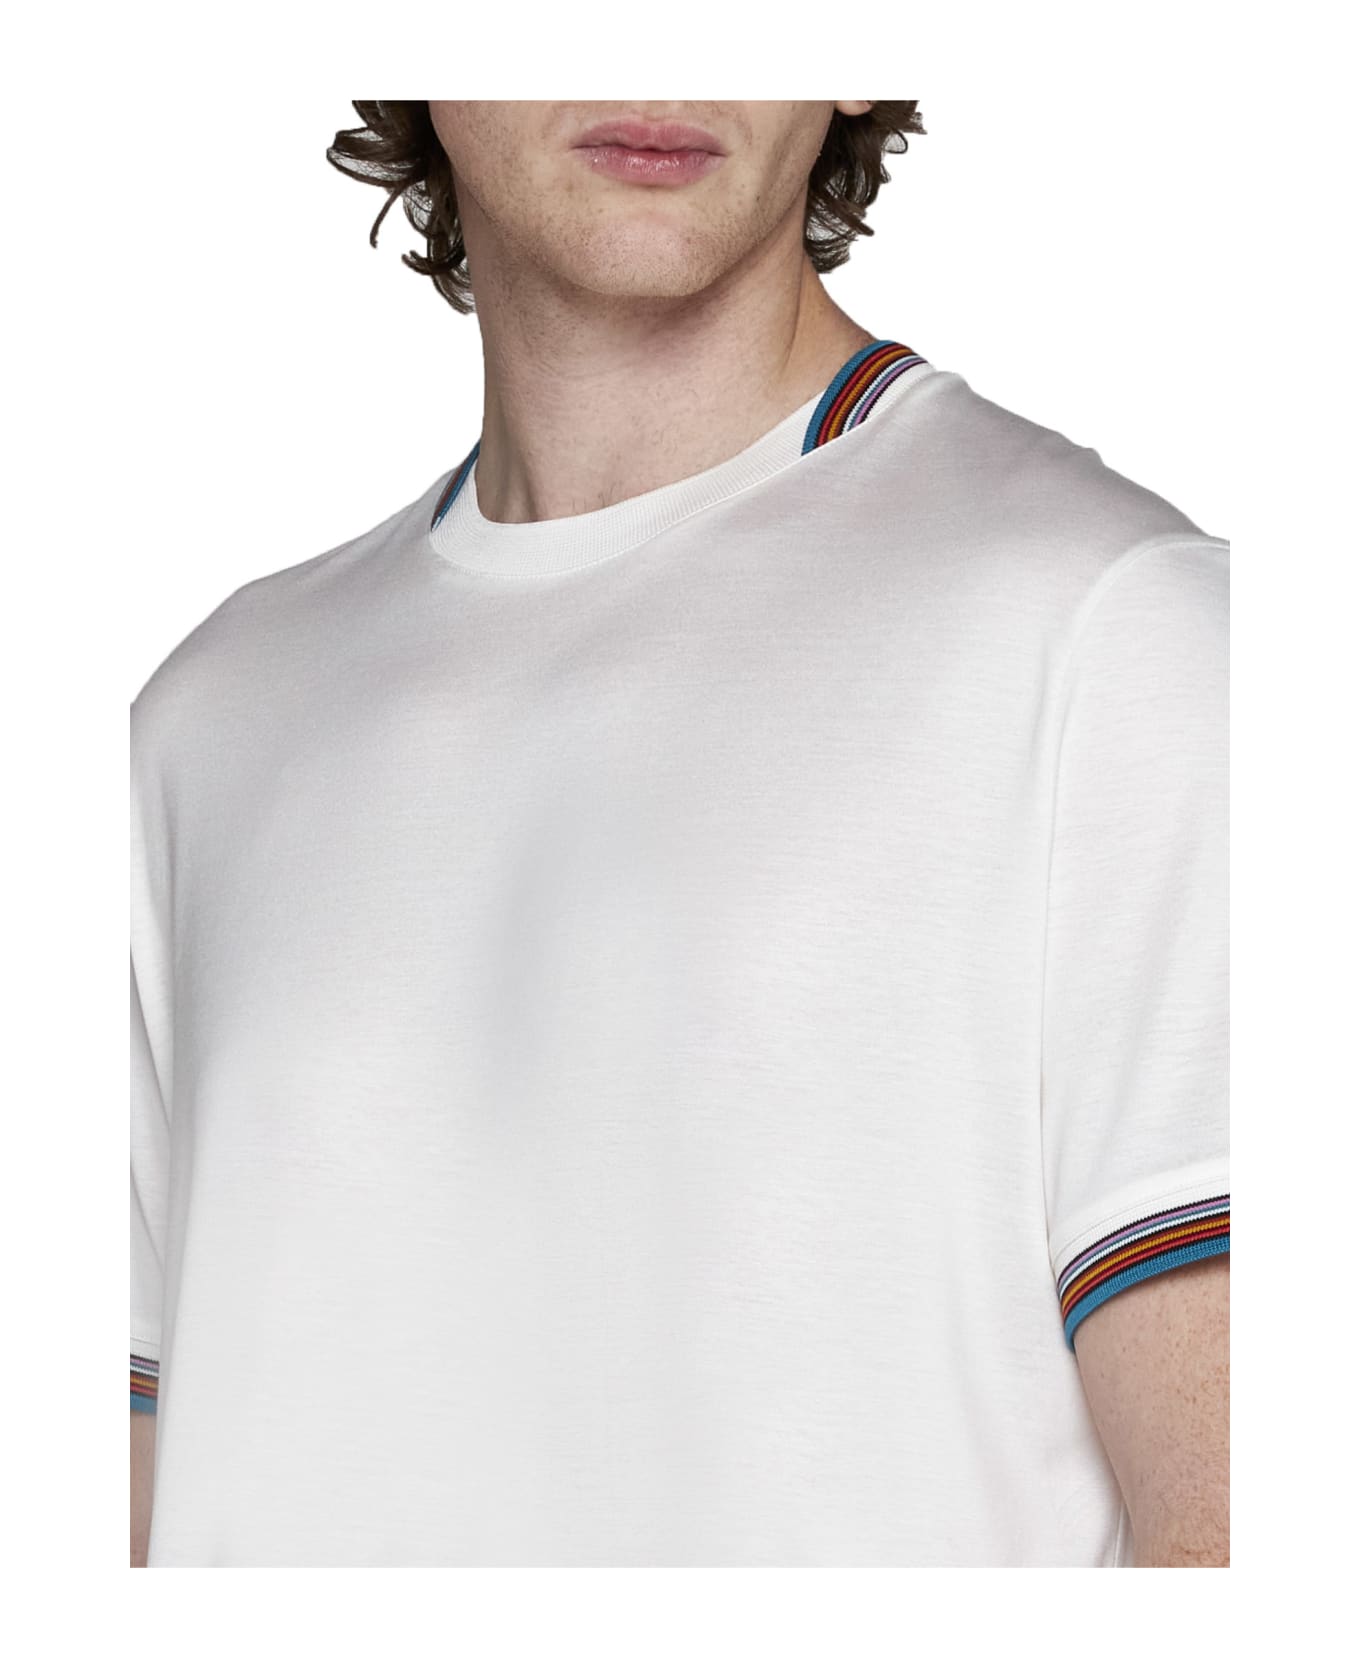 Paul Smith T-Shirt - White